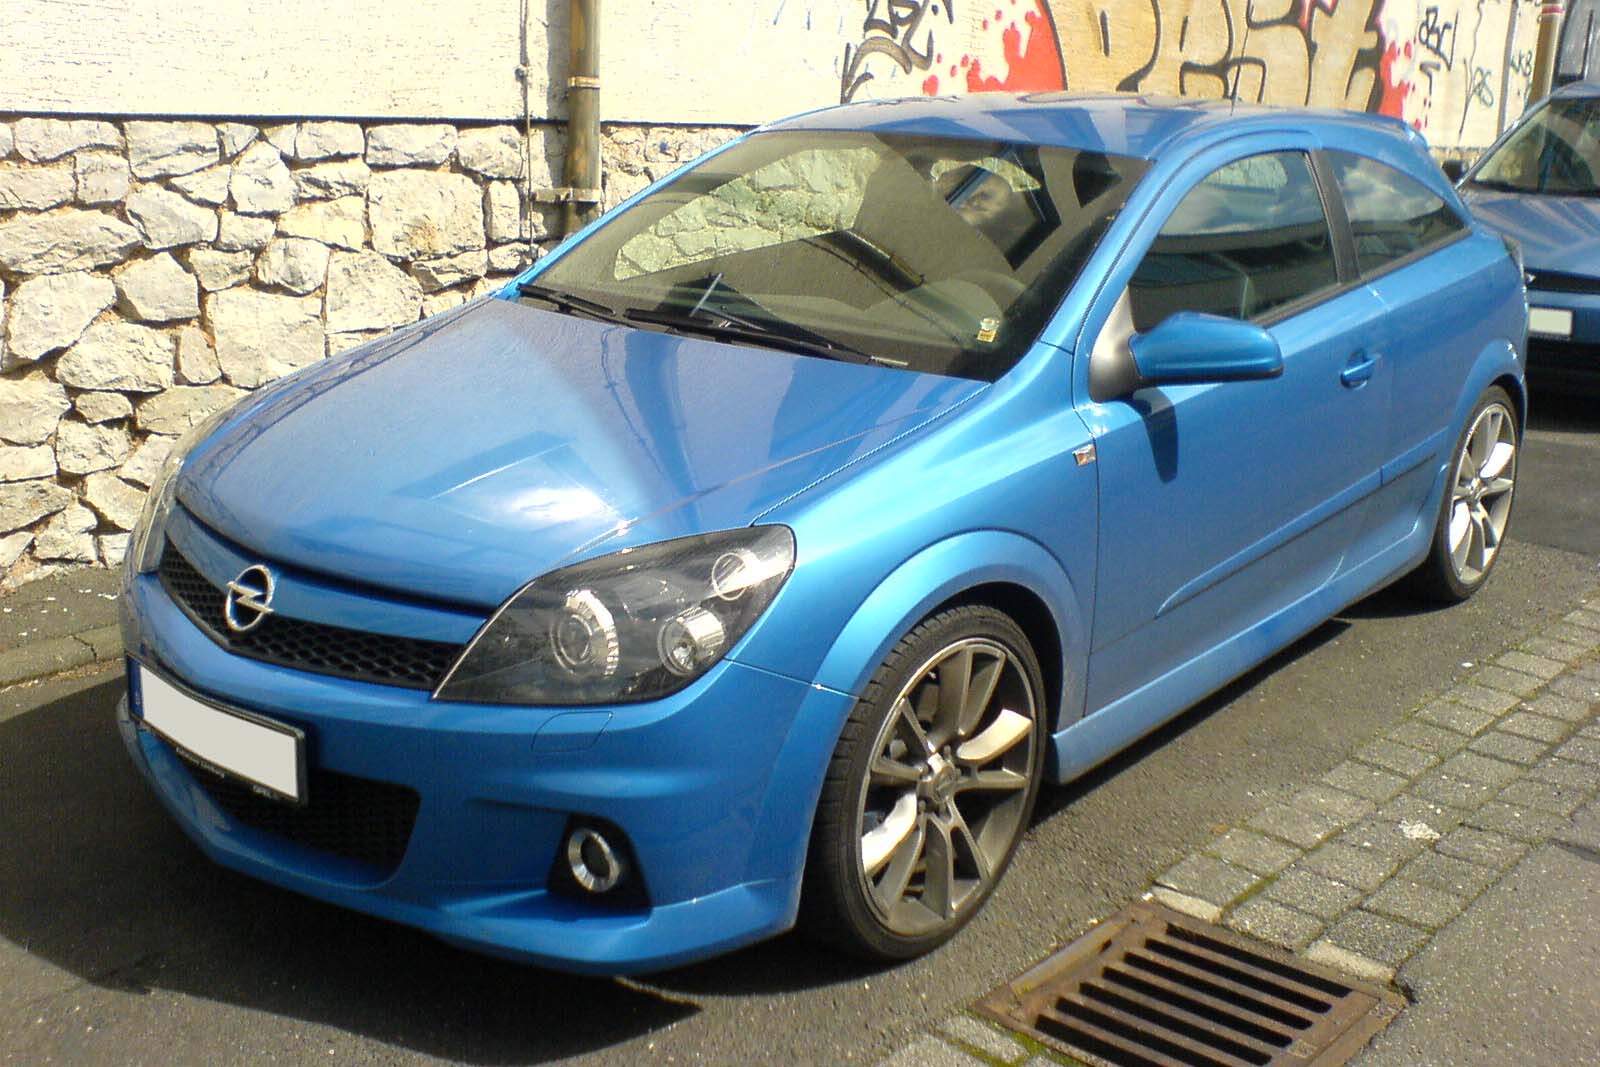 File:Opel astra G 3T opc.jpg - Wikipedia